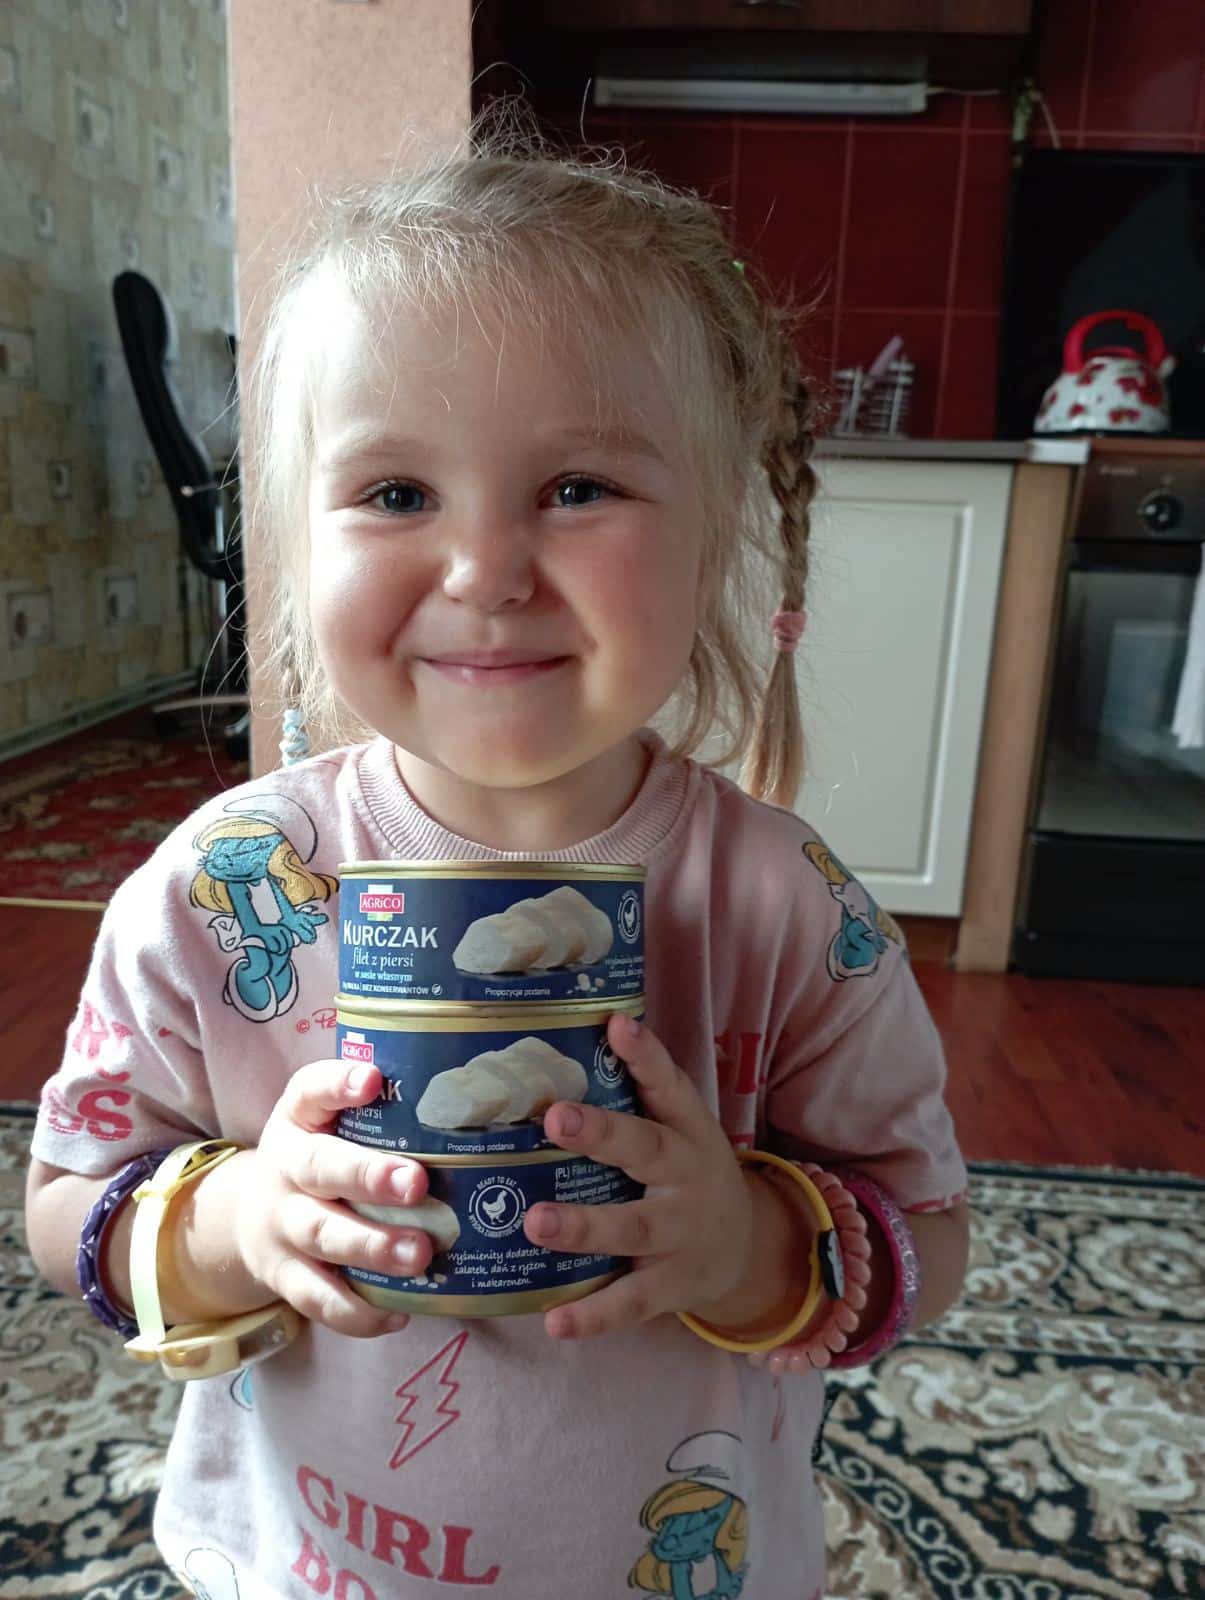 Ukrainian girl smiling because of food donations.